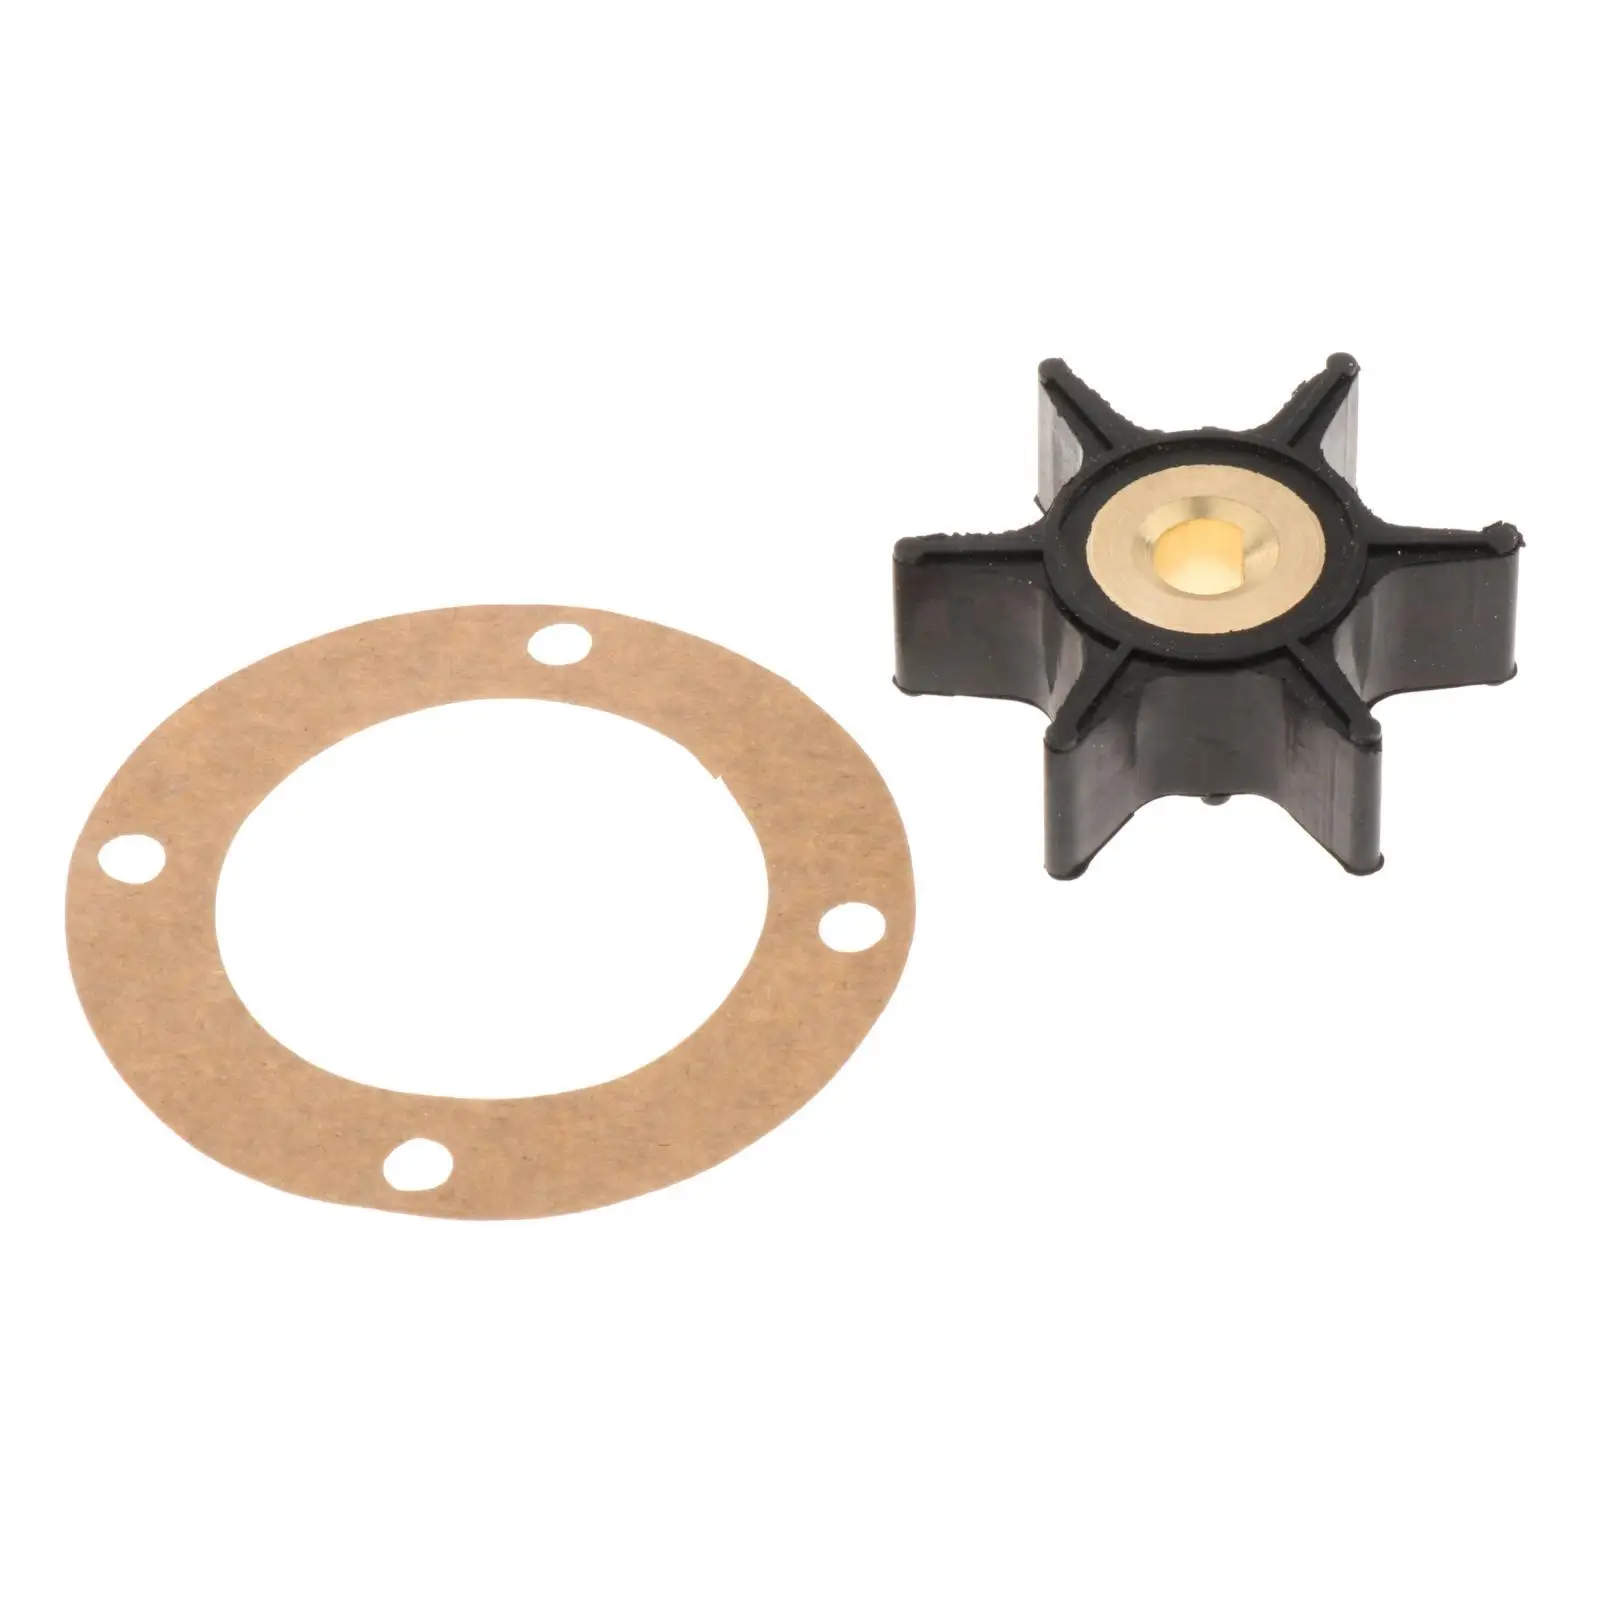 2Pcs Impeller and 4-Hole Gasket Kit Parts Supplies Accessories ,Repair Kit , Impeller   131-0386 170-3172 Pump ,131-0257